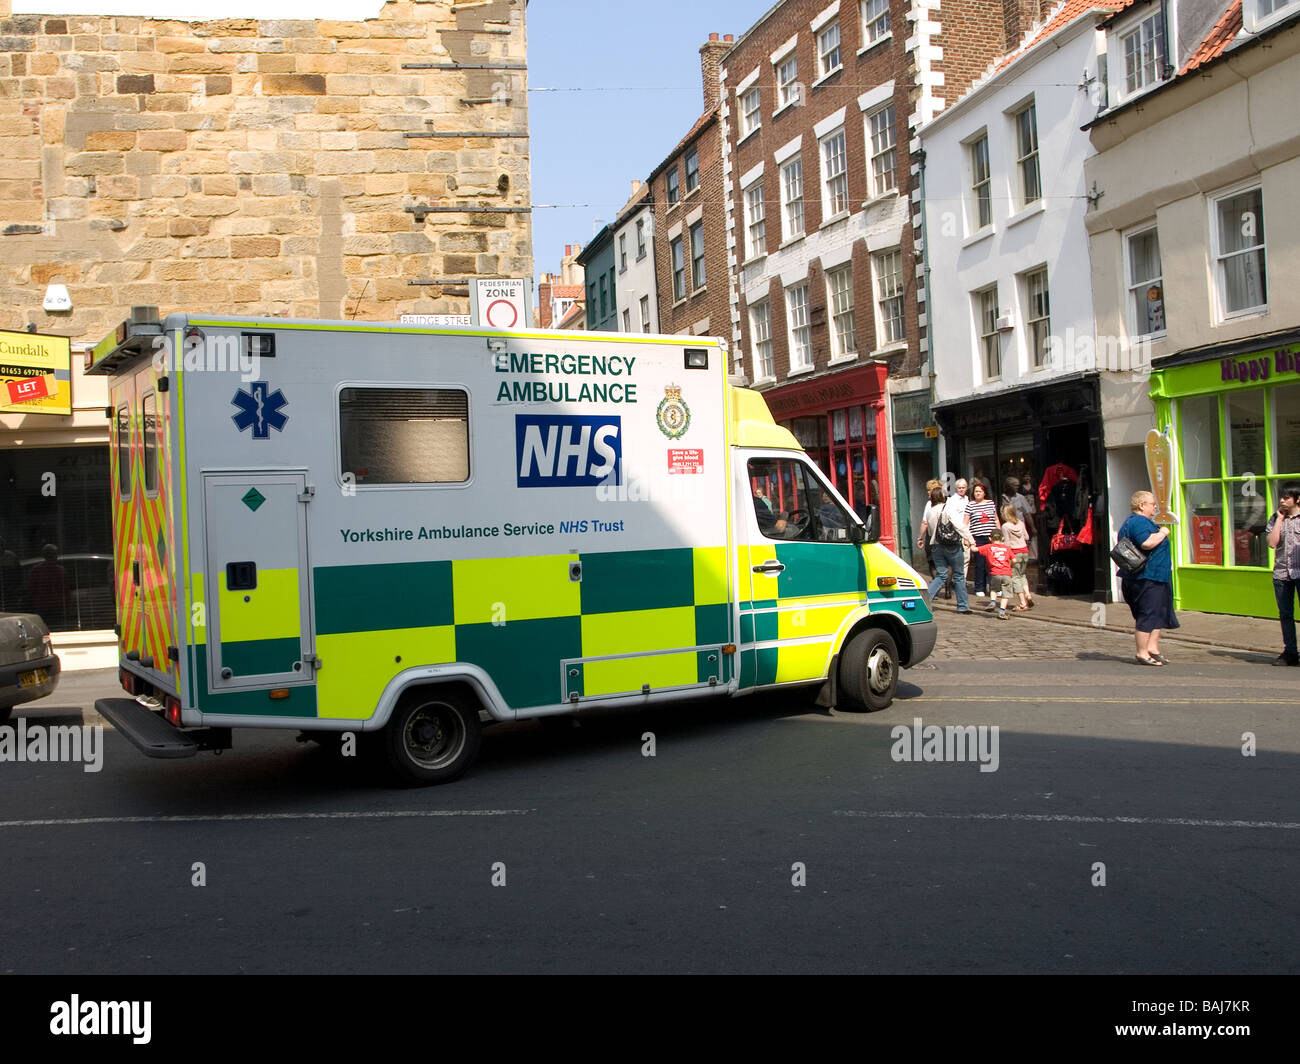 NHS emergencia ambulancia de guardia se convierte en una calle angosta en Whitby UK Foto de stock